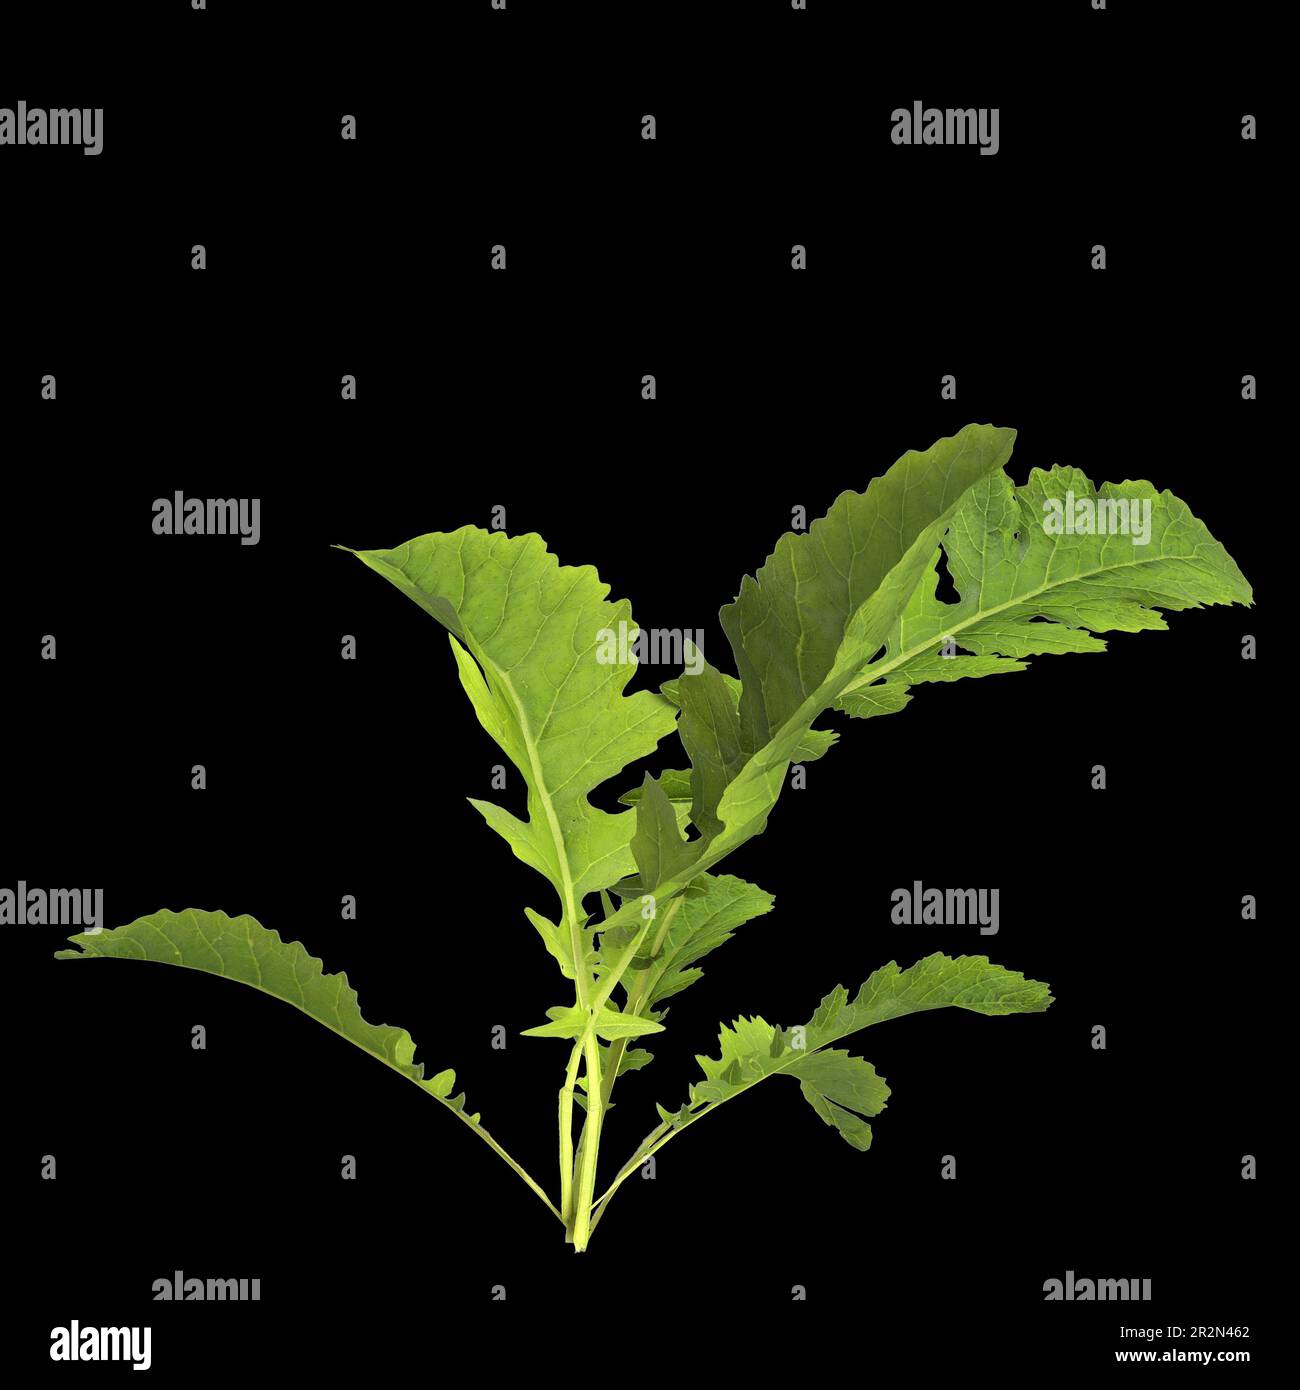 3d illustration of rorippa palustris plant isolated on black background Stock Photo